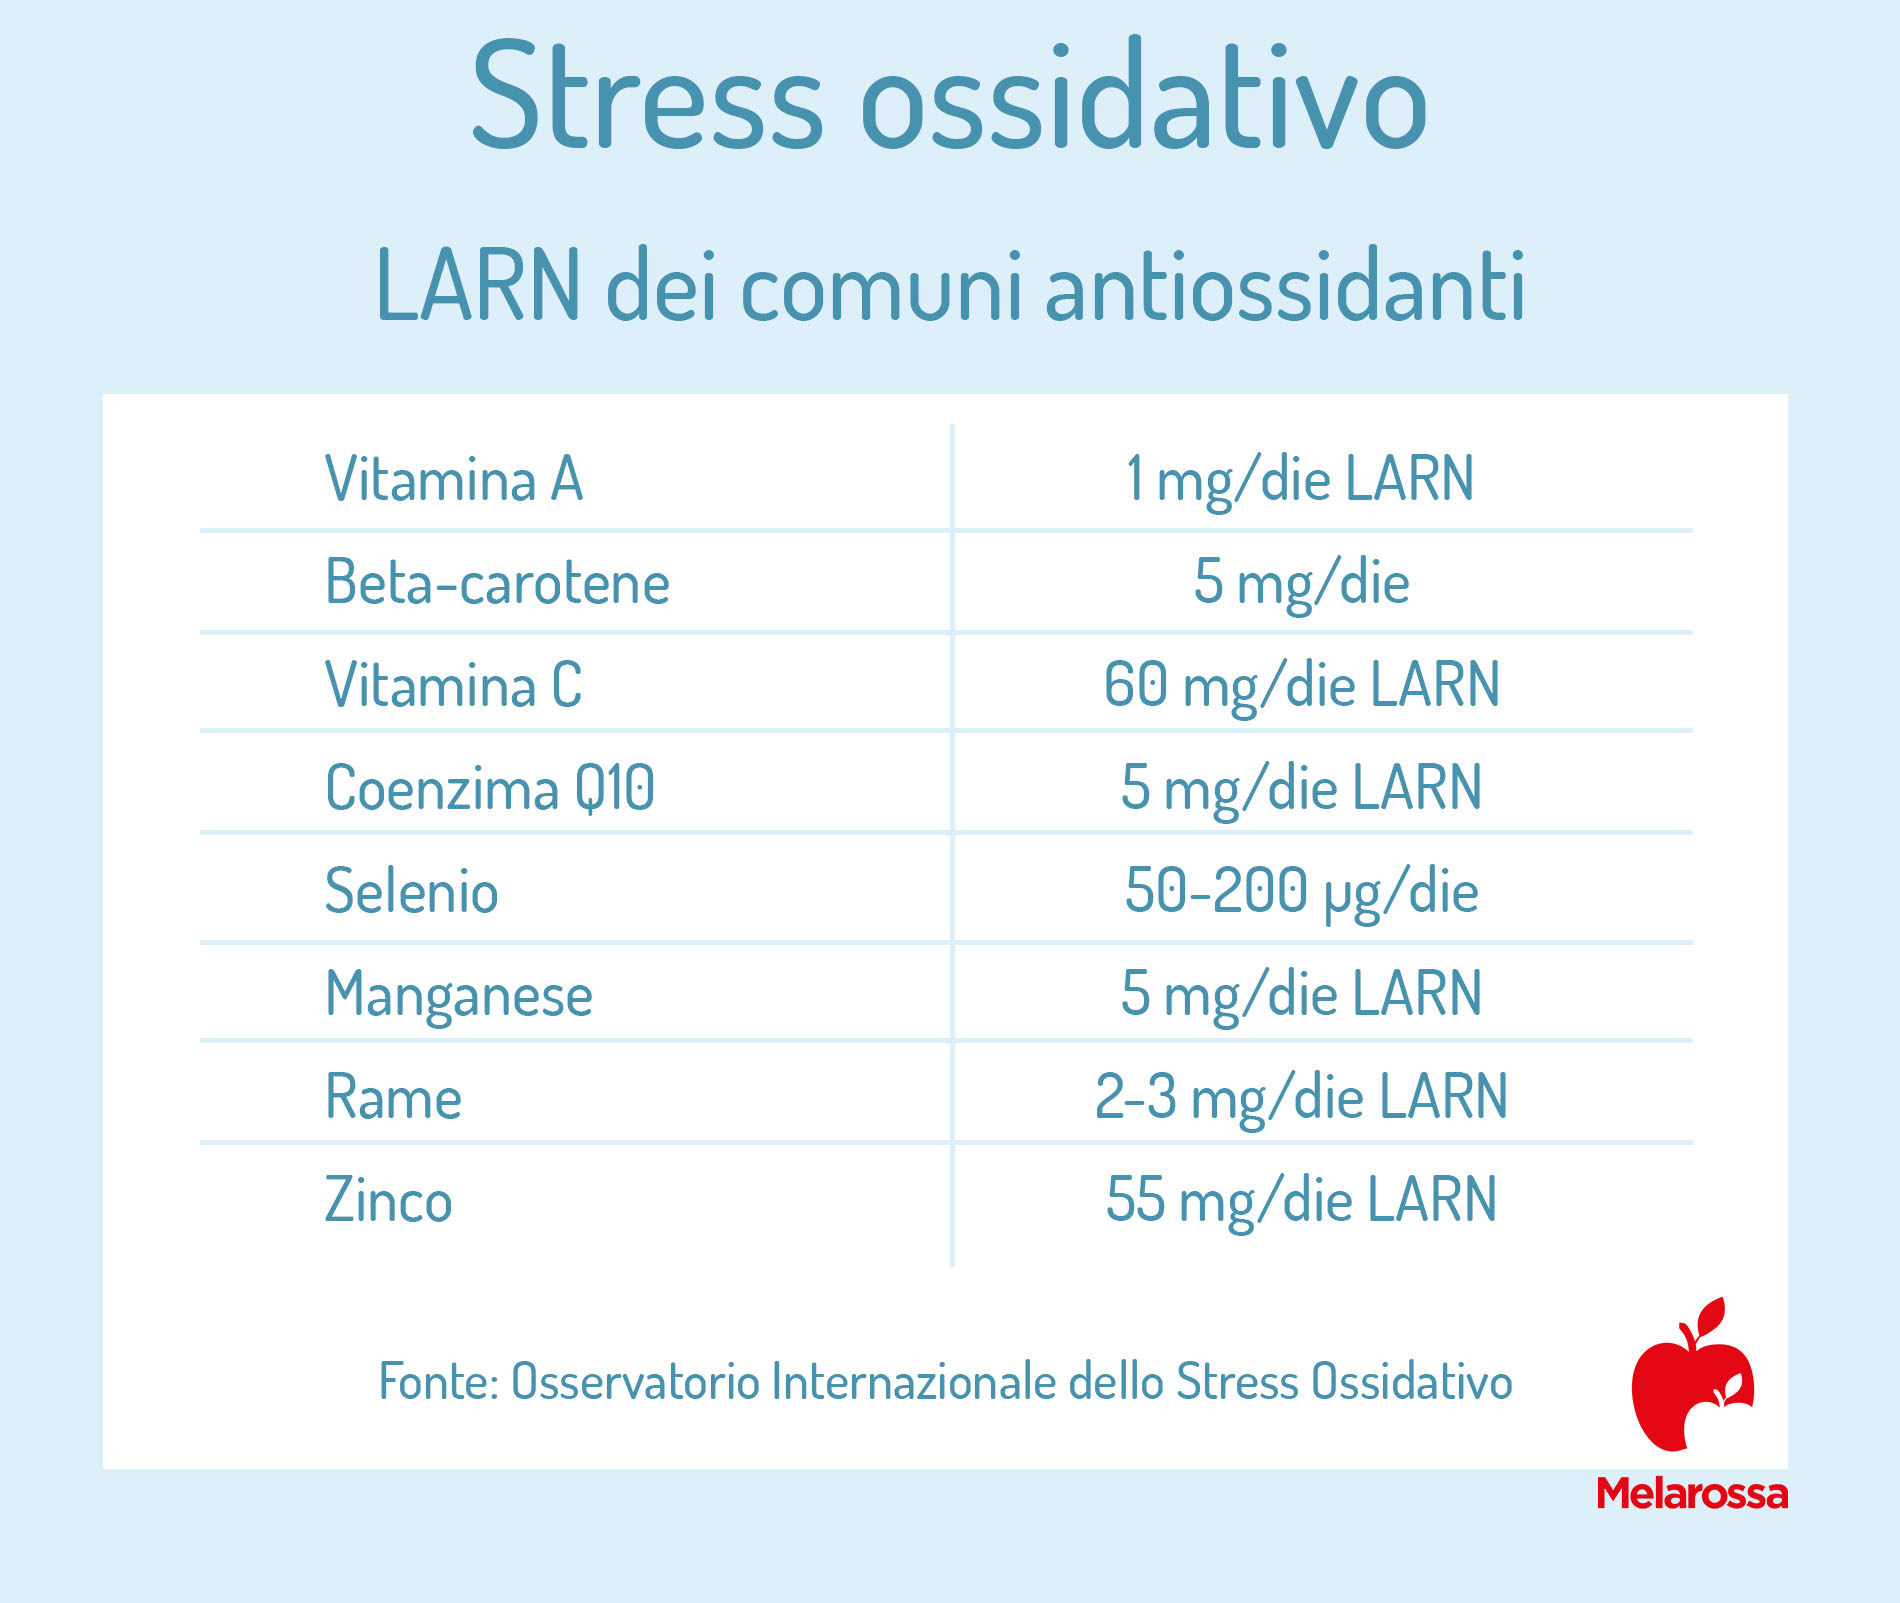 stress ossidativo: lista degli antiossidanti